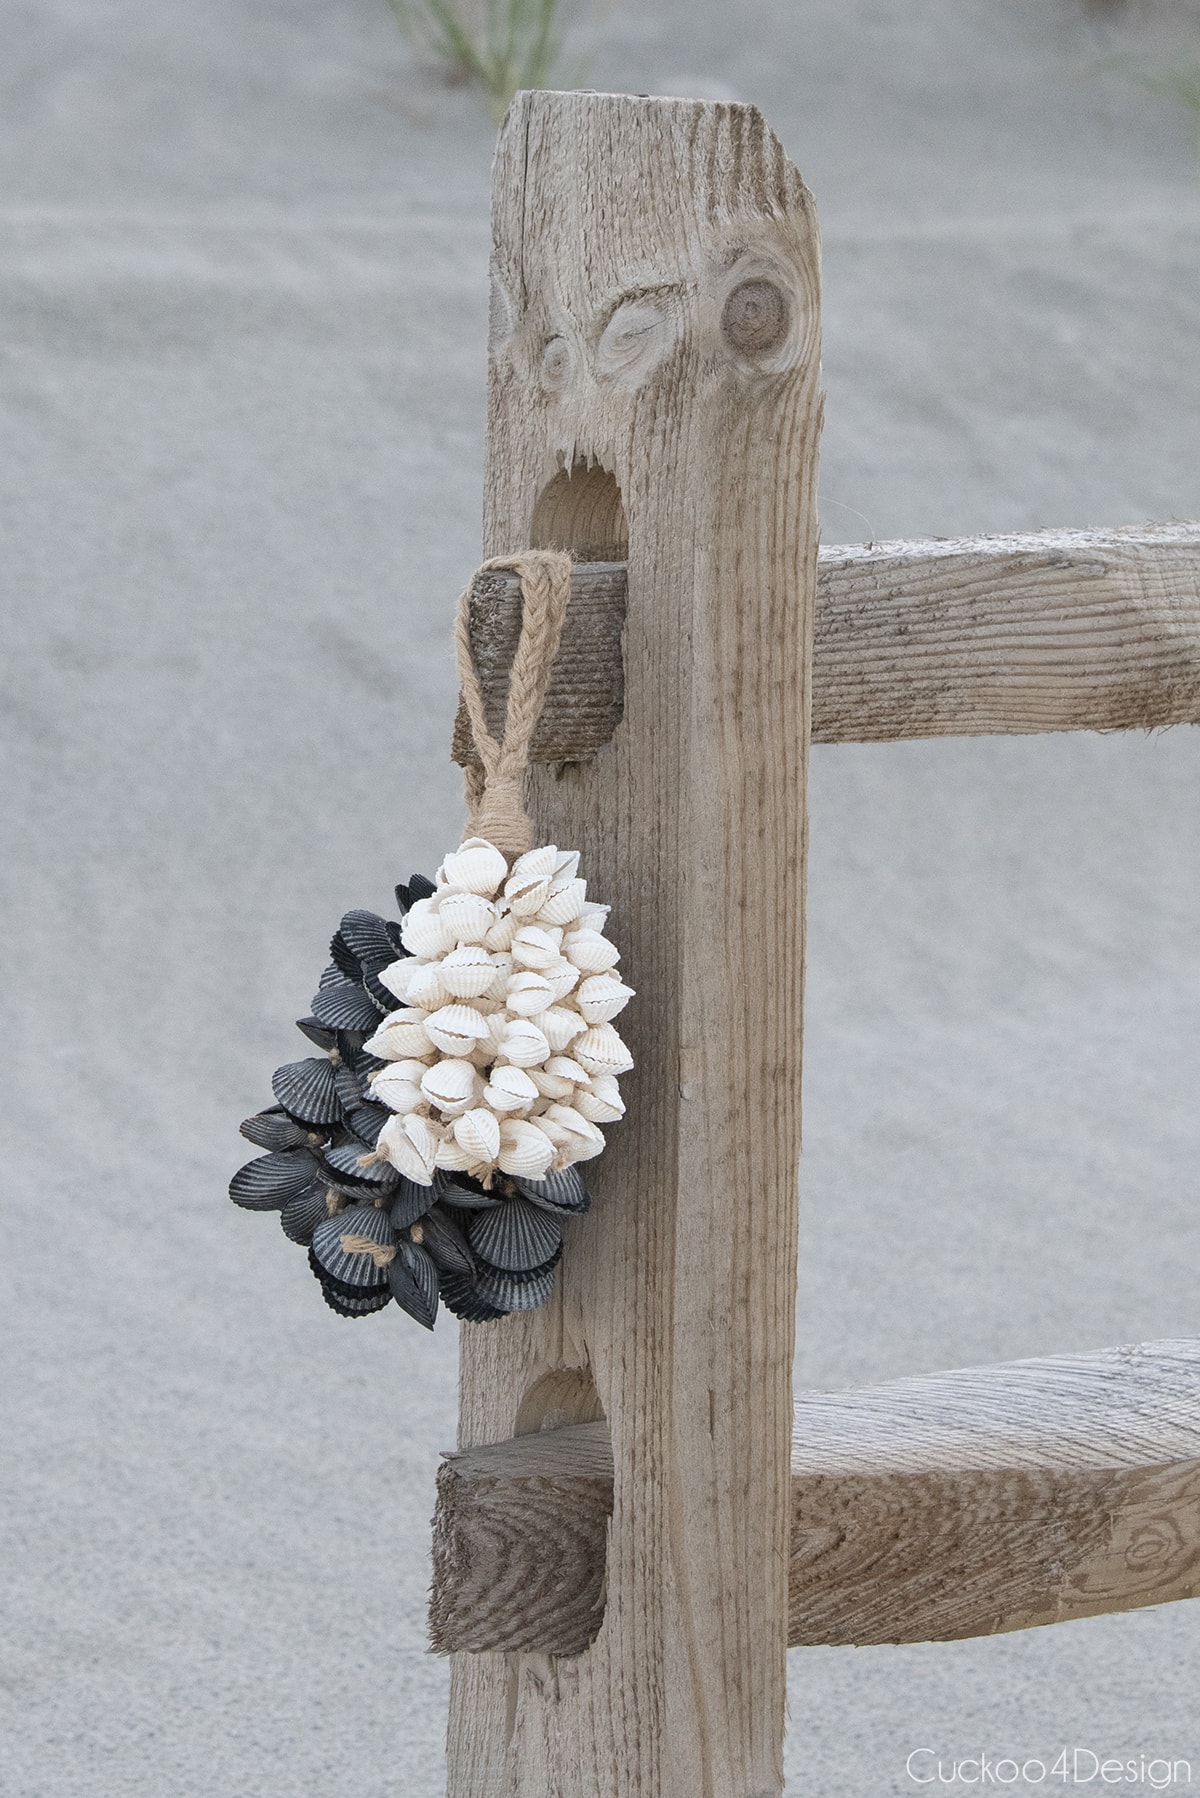 white seashell tassel and black scallop seashell tassel hanging on beach fence